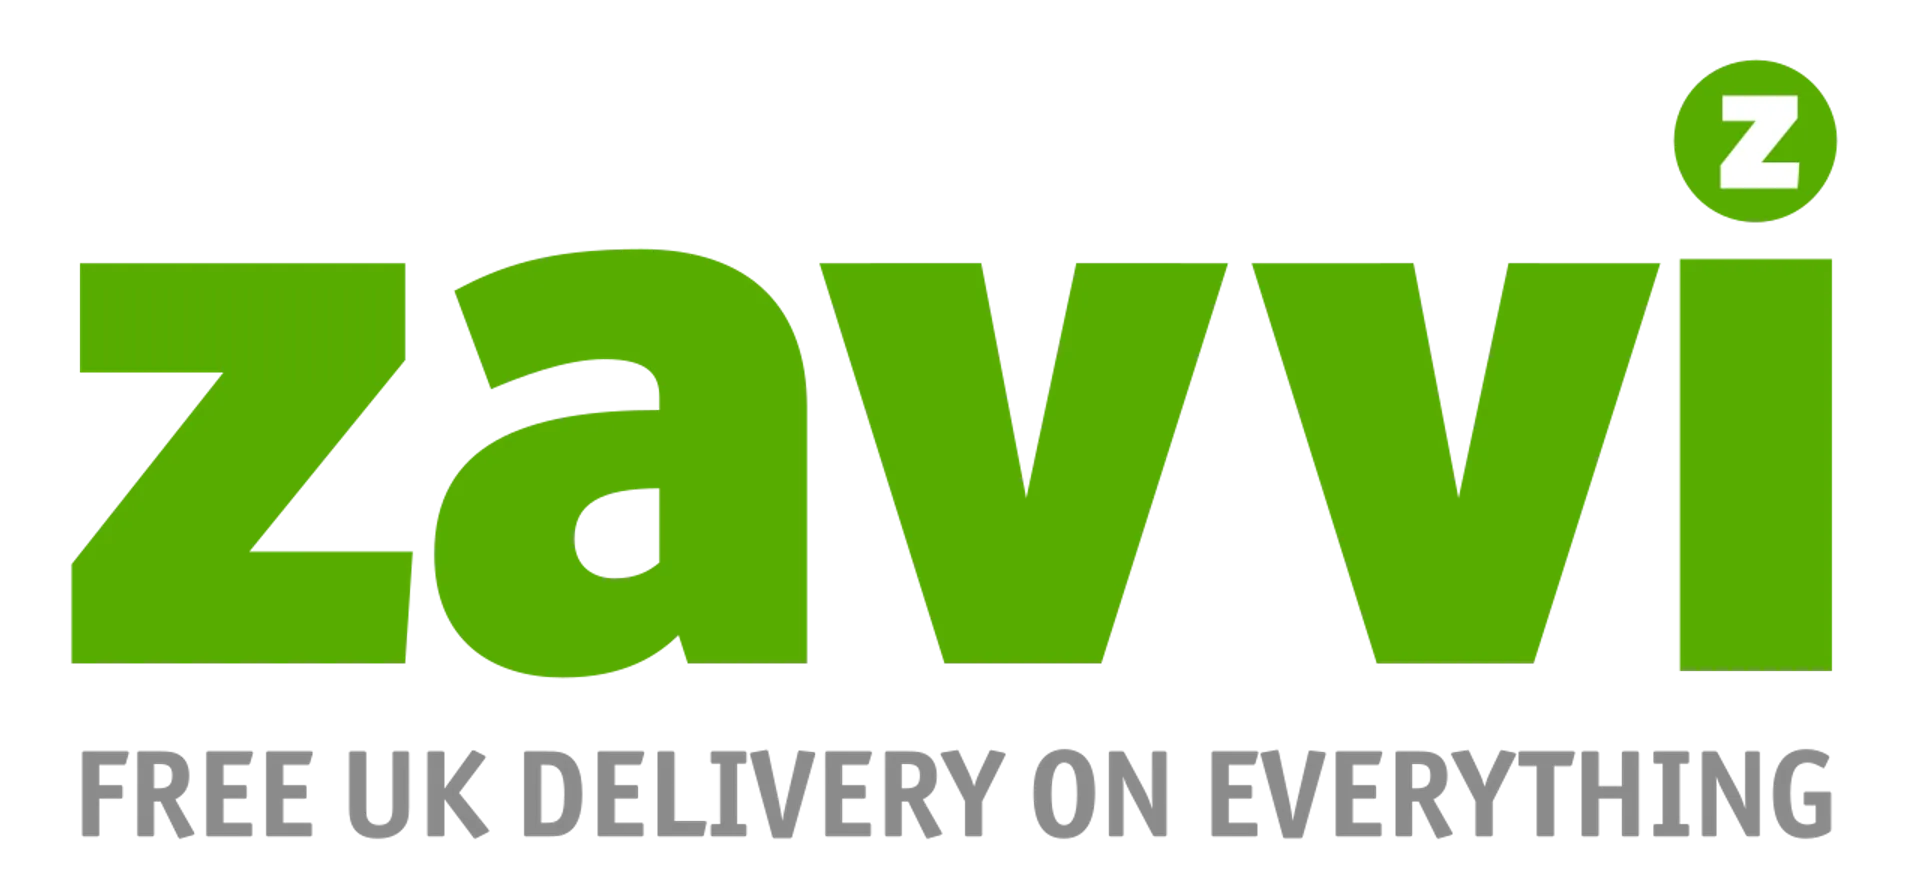 ZAVVI logo